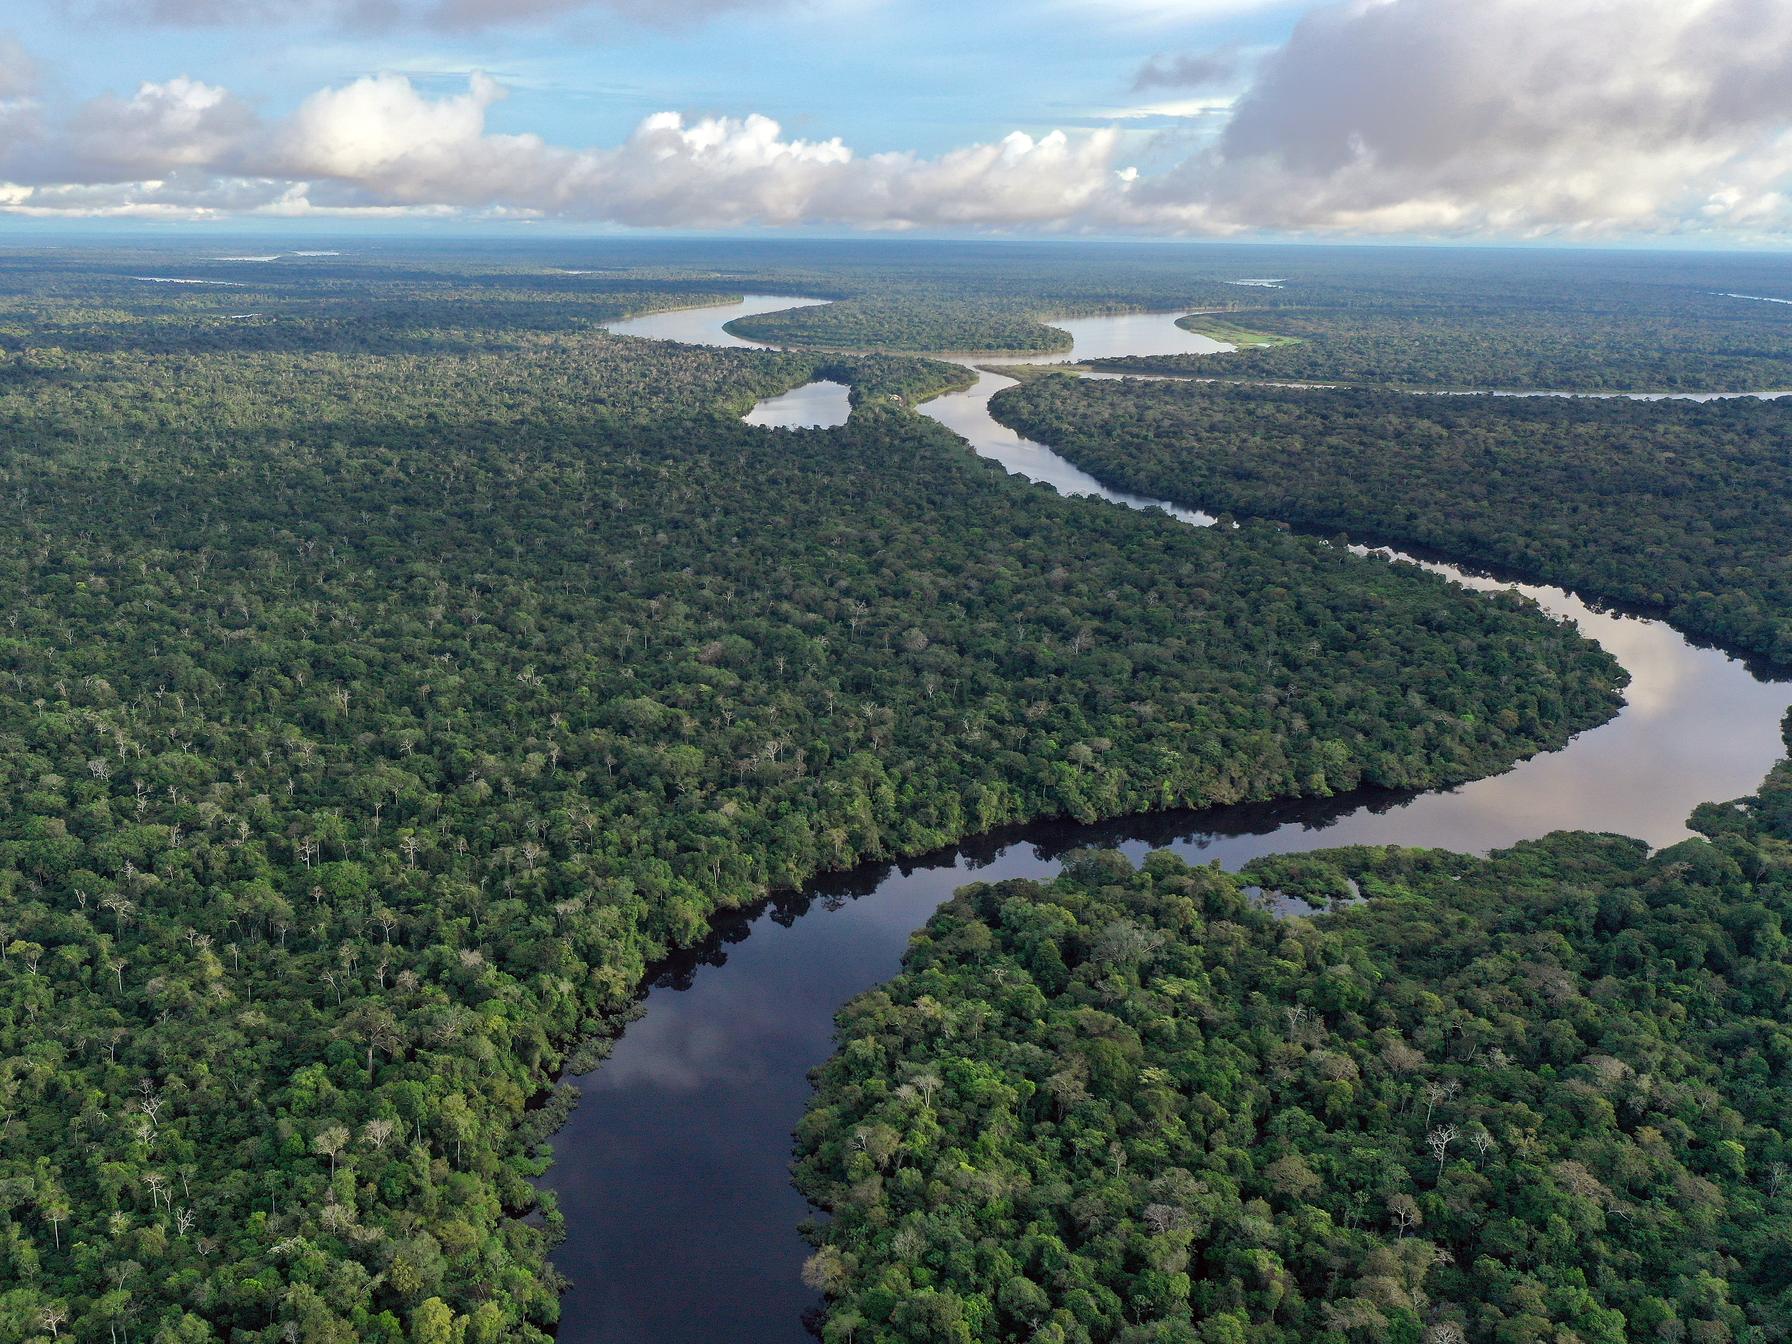 Vista of the Amazon River, meandering through dense rainforest